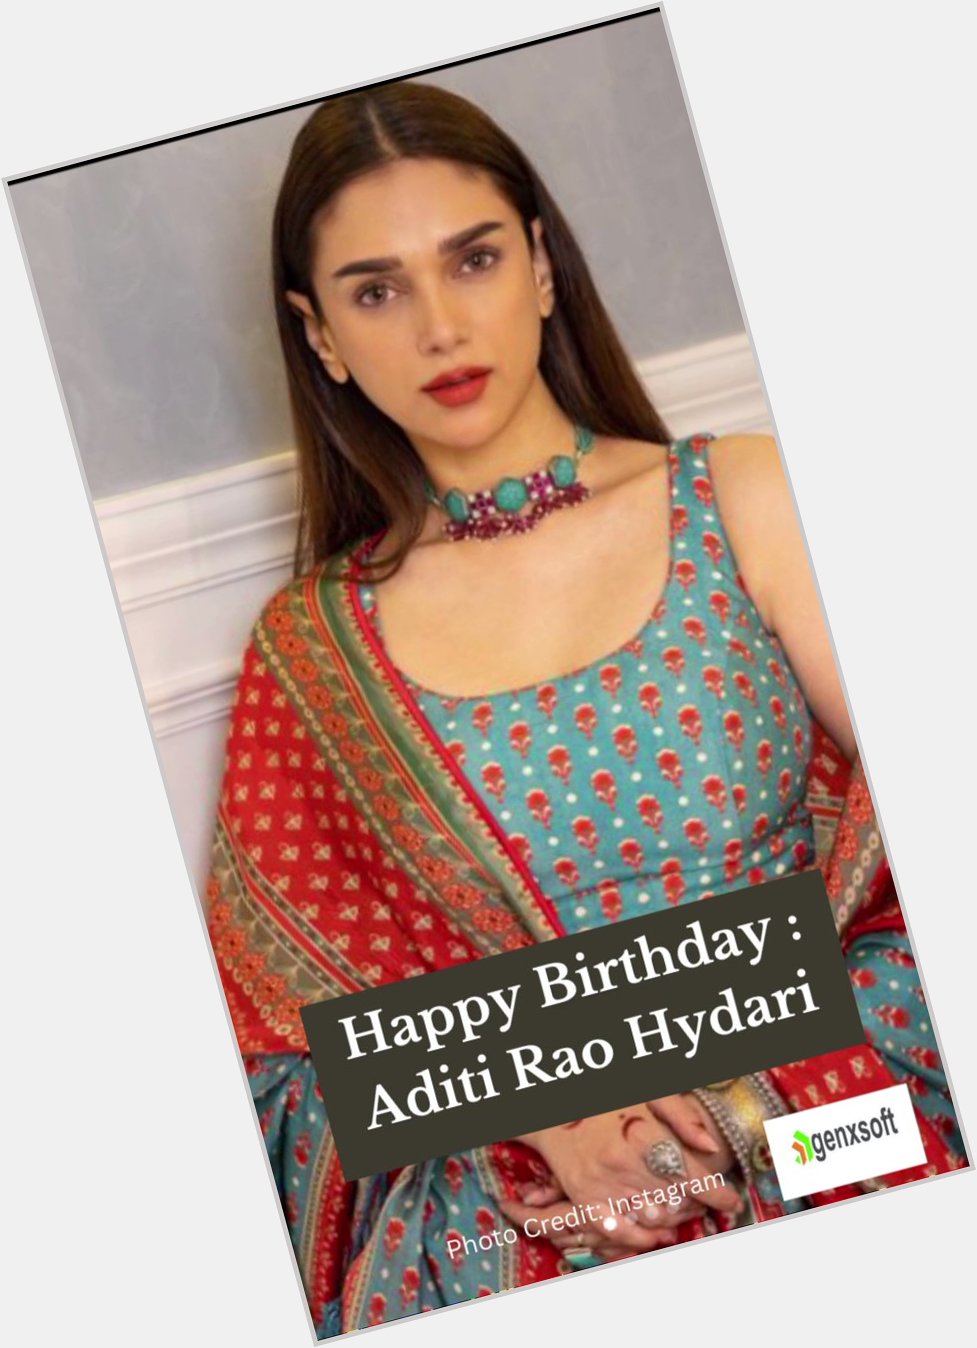 Happy Birthday Aditi Rao Hydari : belongs to not one but two royal families! 